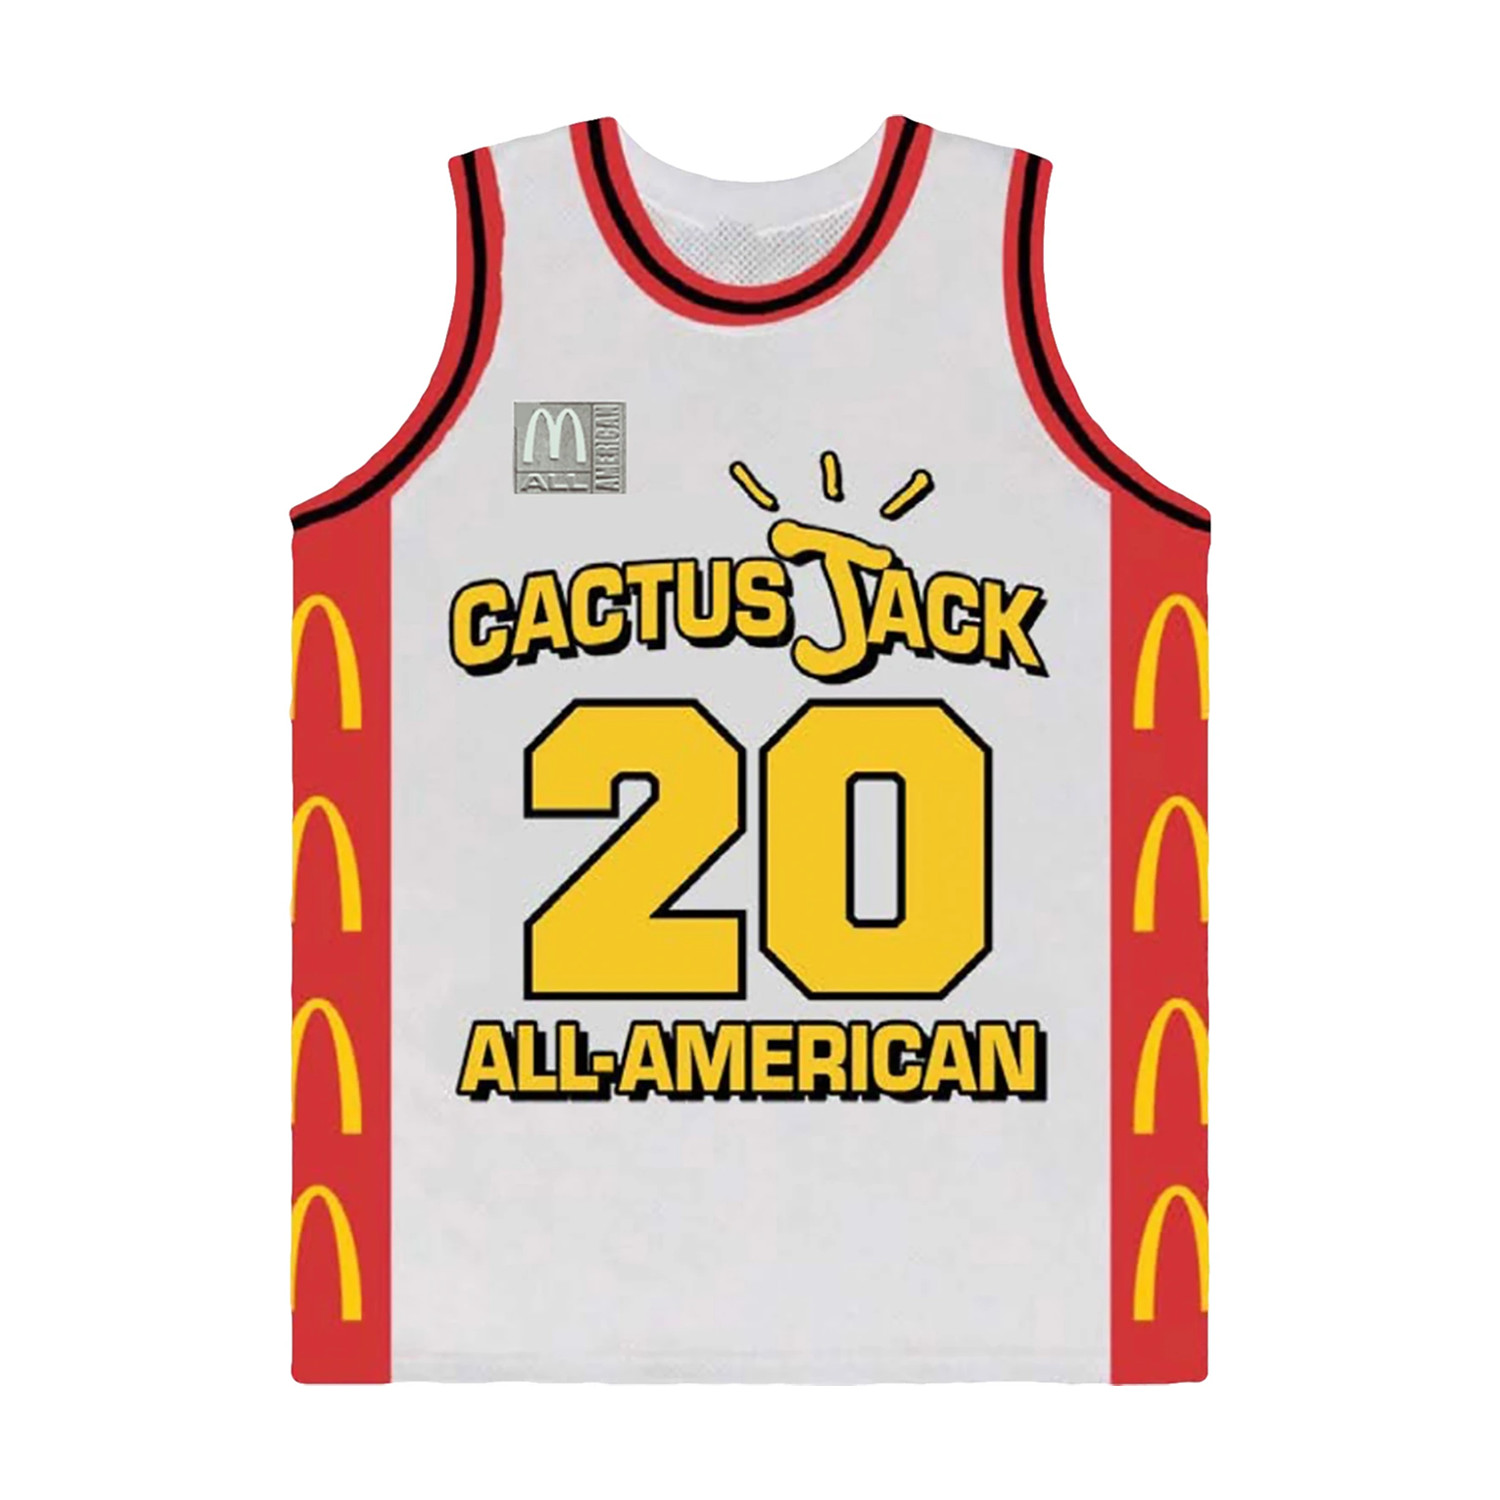 Travis Scott x McDonalds basket jersey